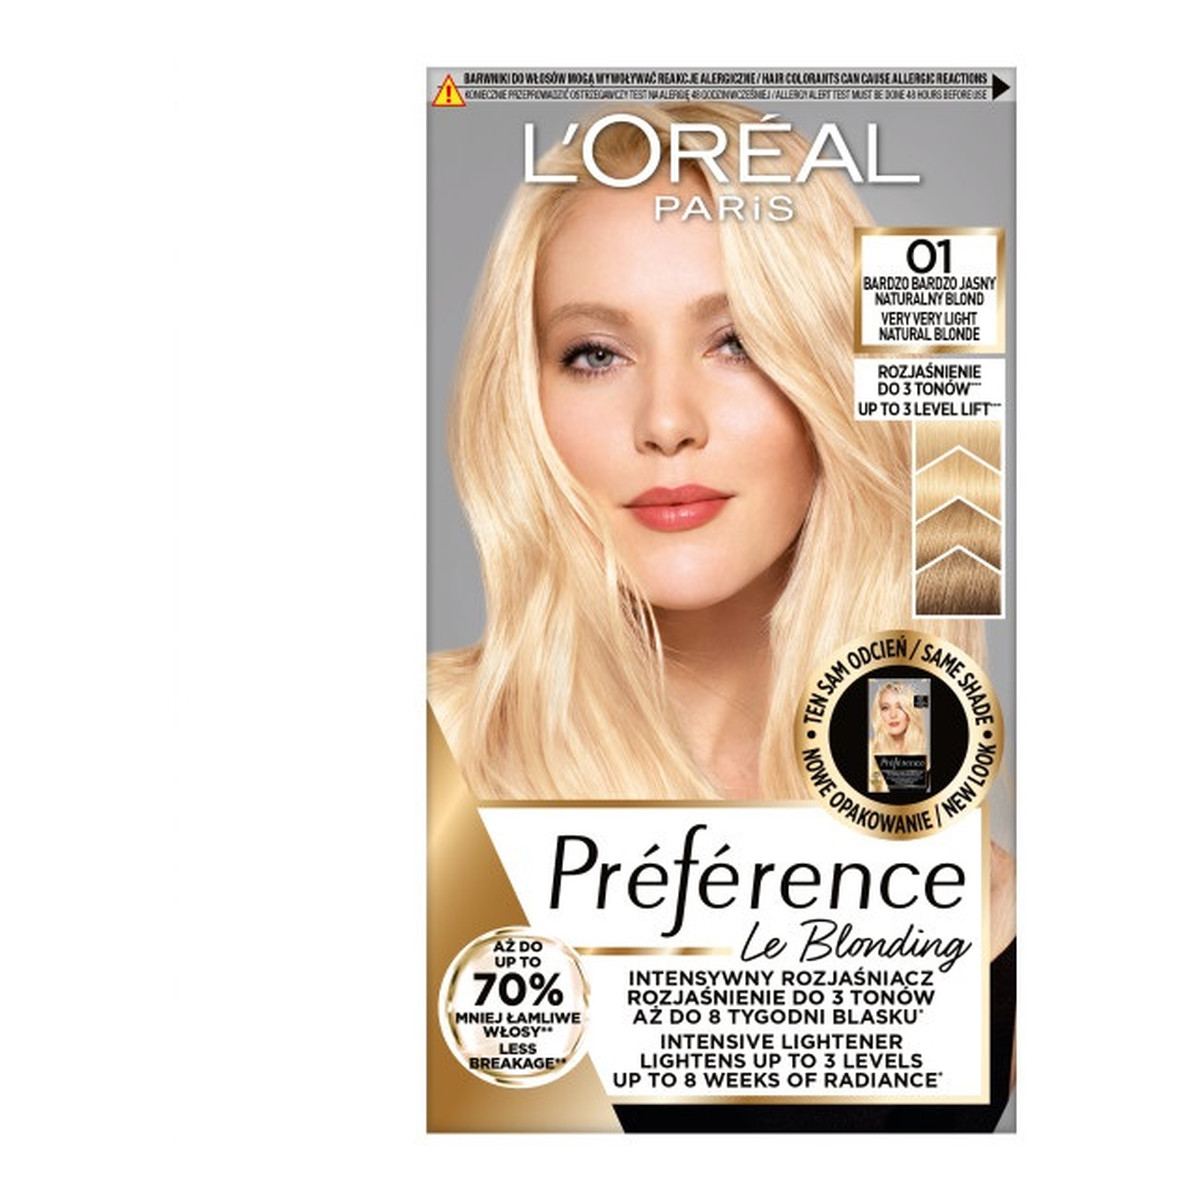 L'Oreal Paris Preference le blonding farba do włosów 01 bardzo bardzo jasny naturalny blond